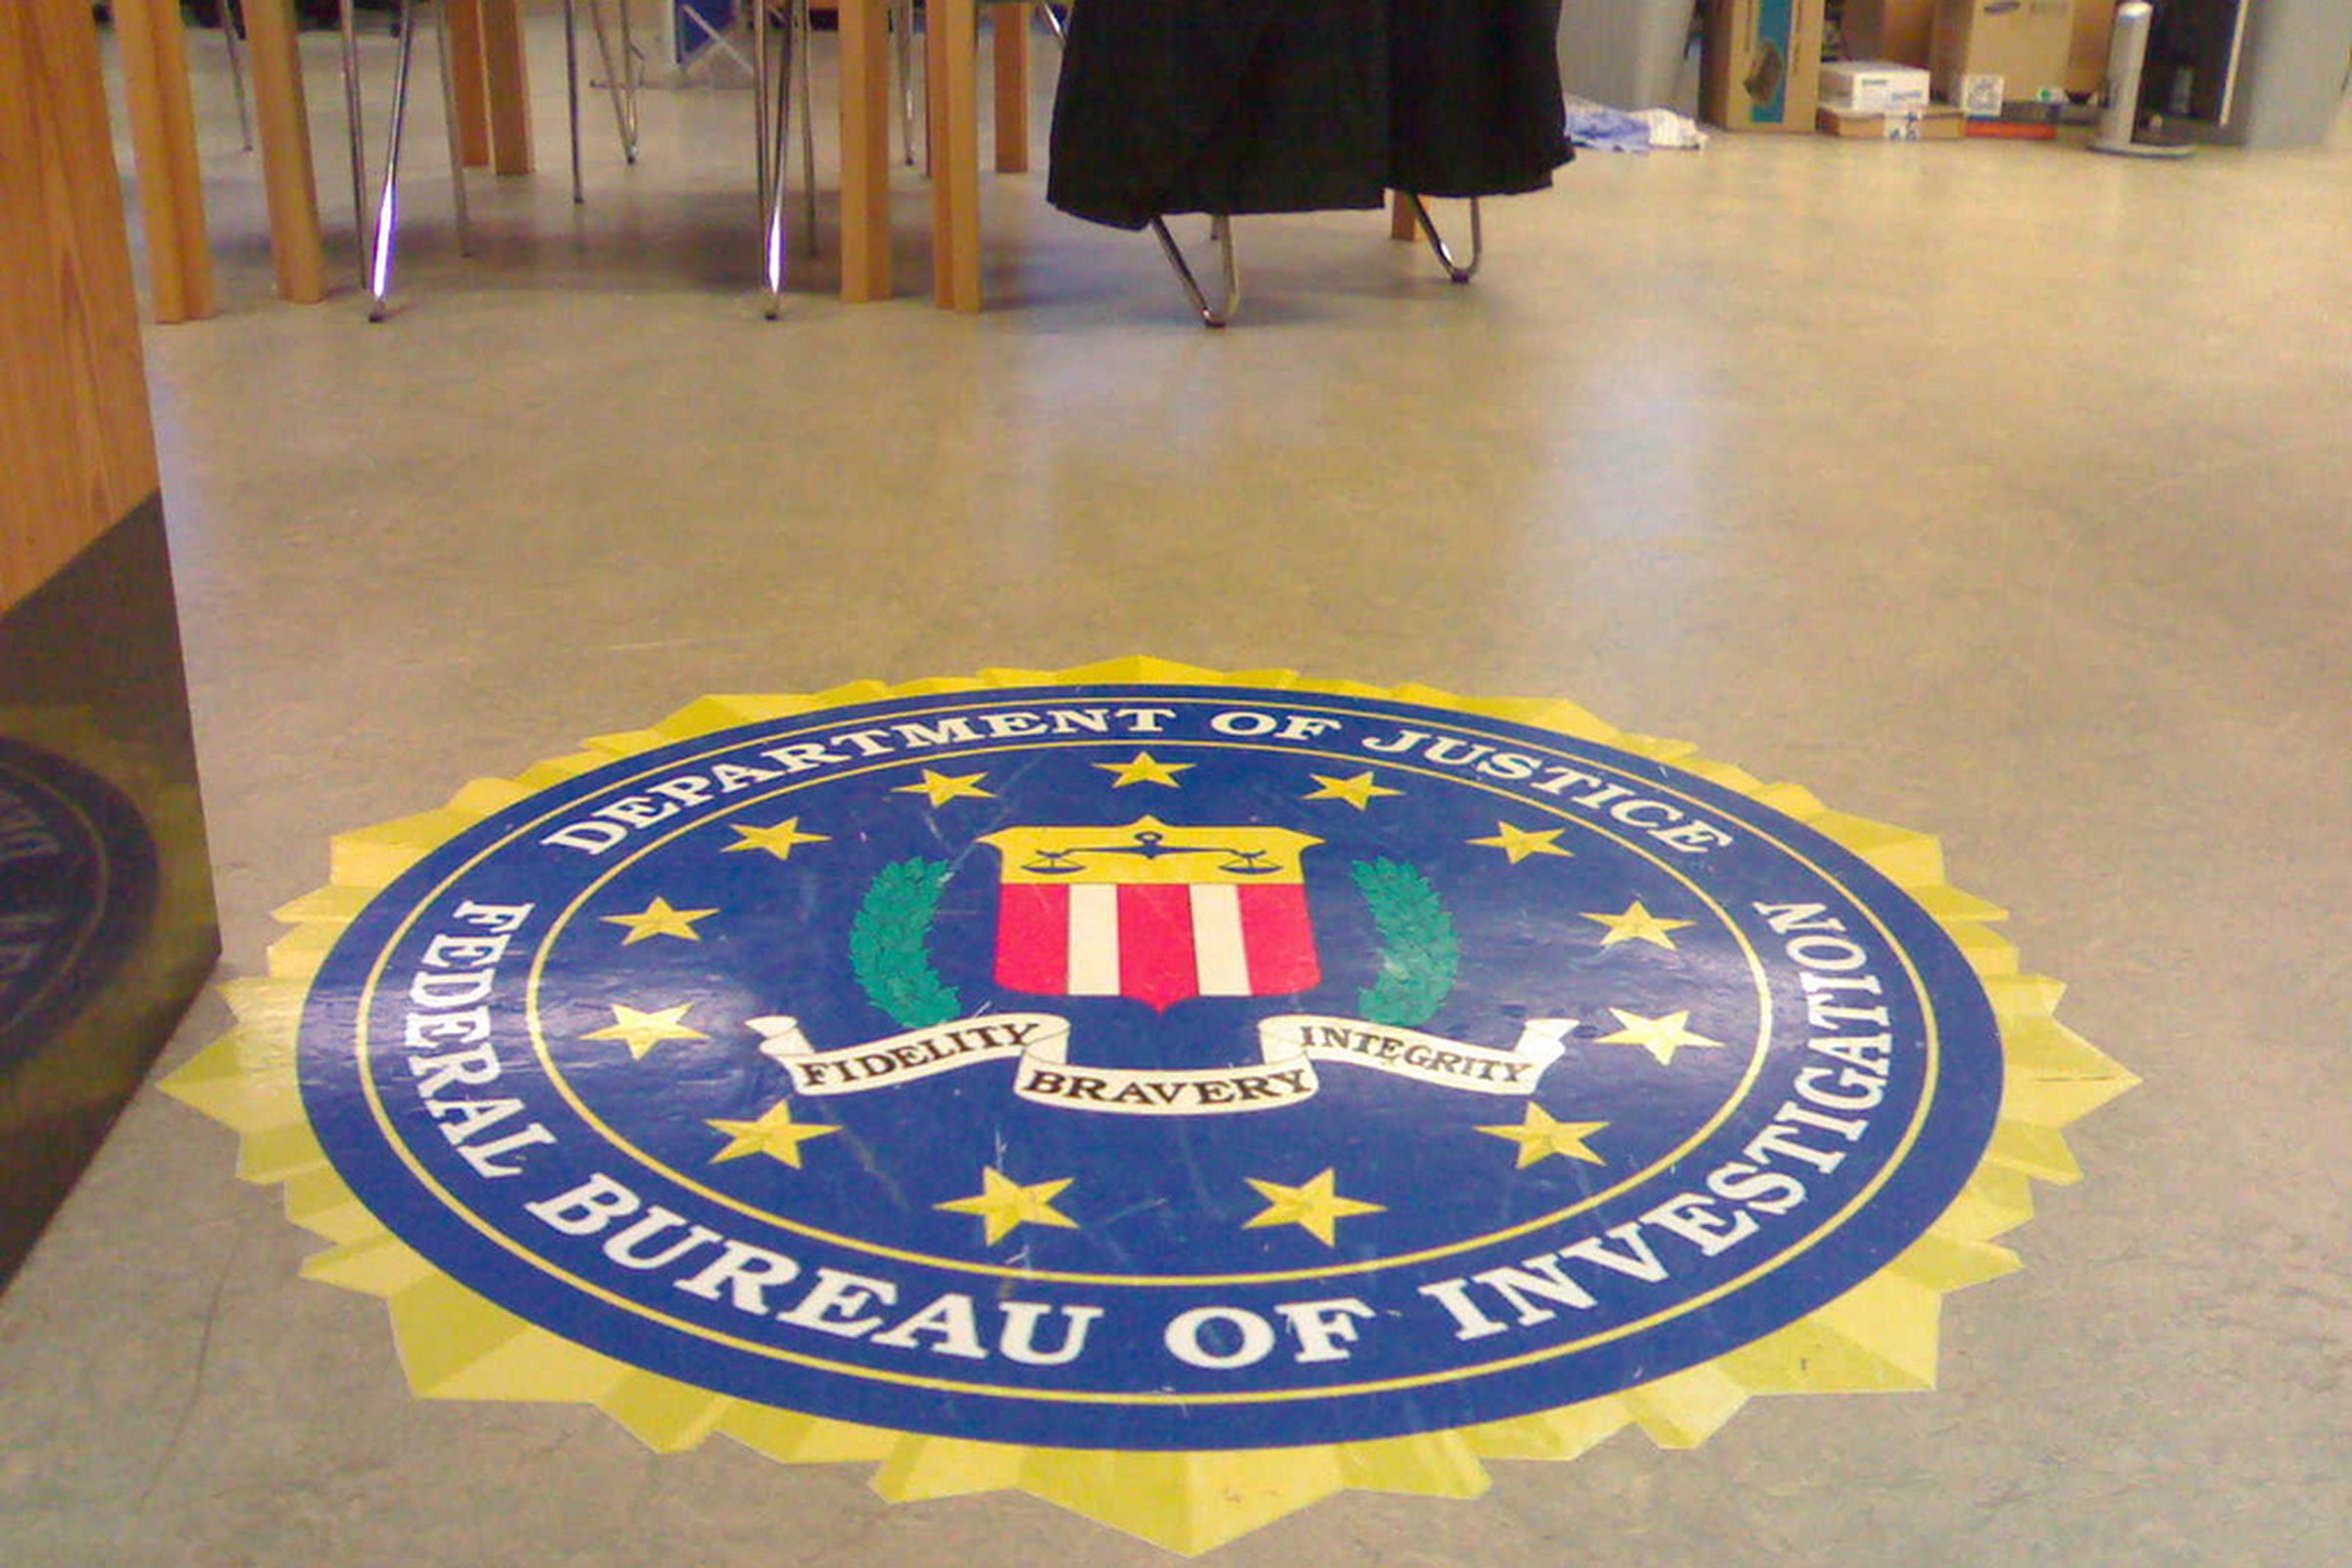 FBI-logo